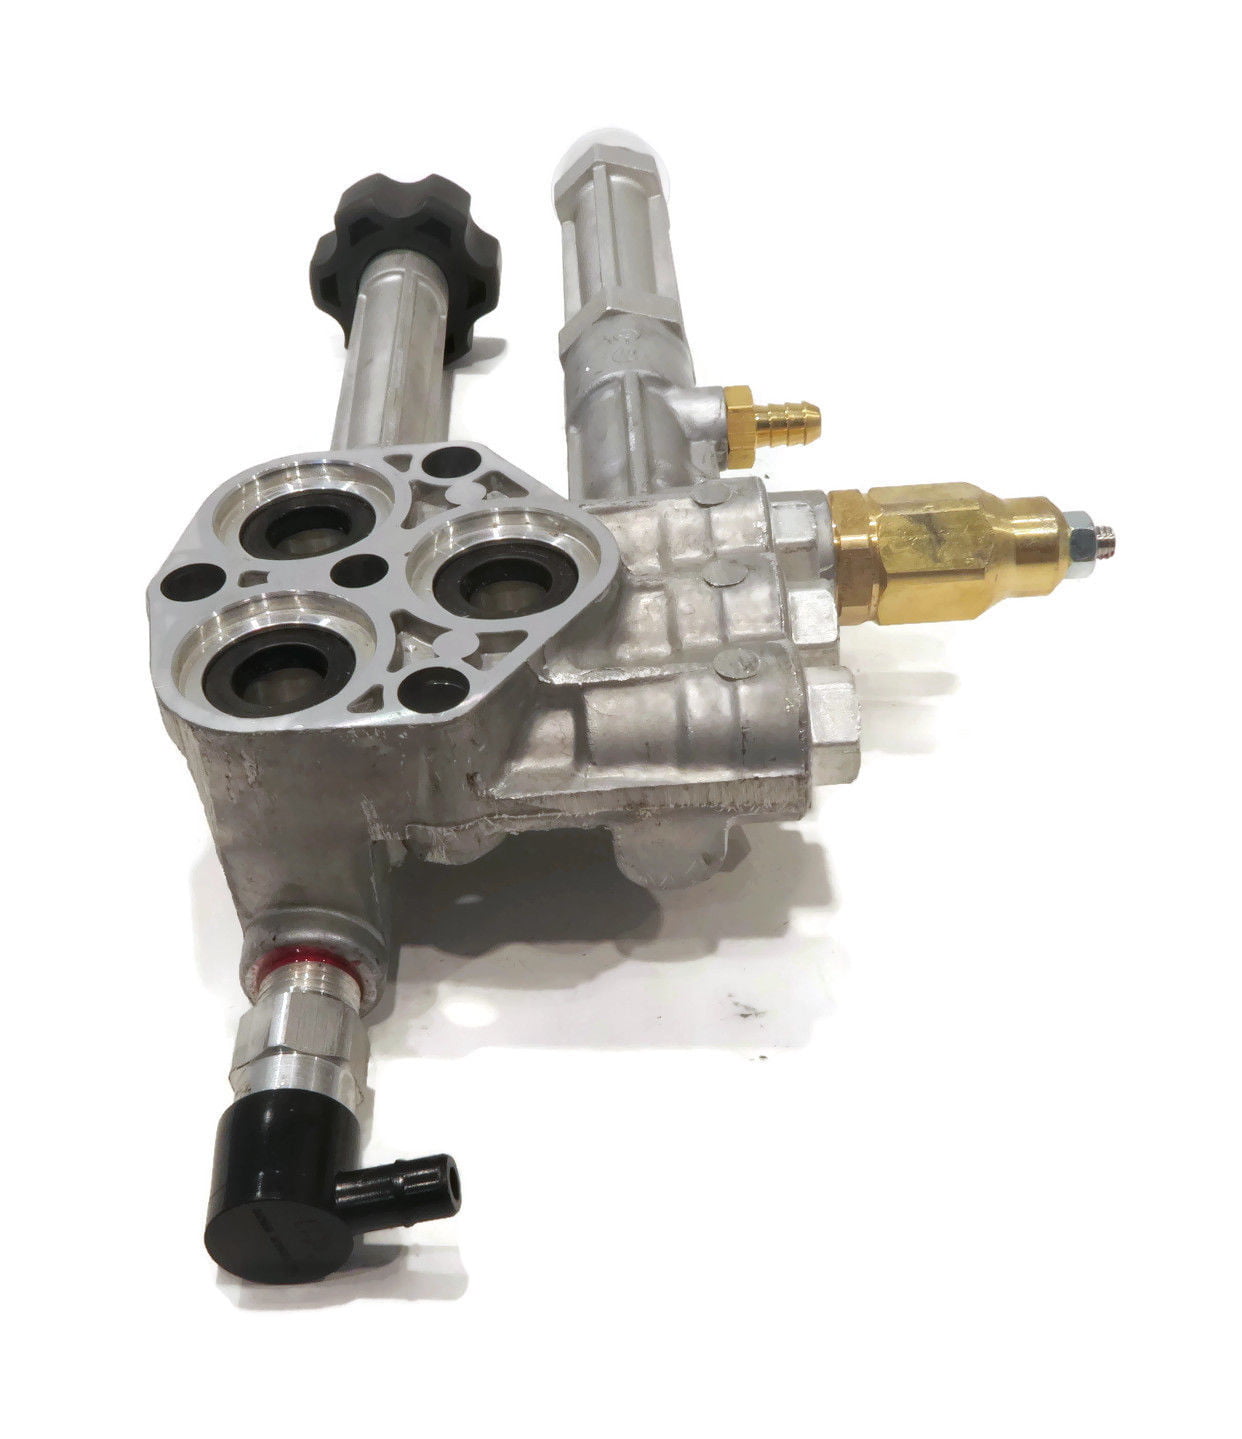 Bolt On RMW2.2G24 Upgrade Pressure Pump Head Kit for Pressure Washers